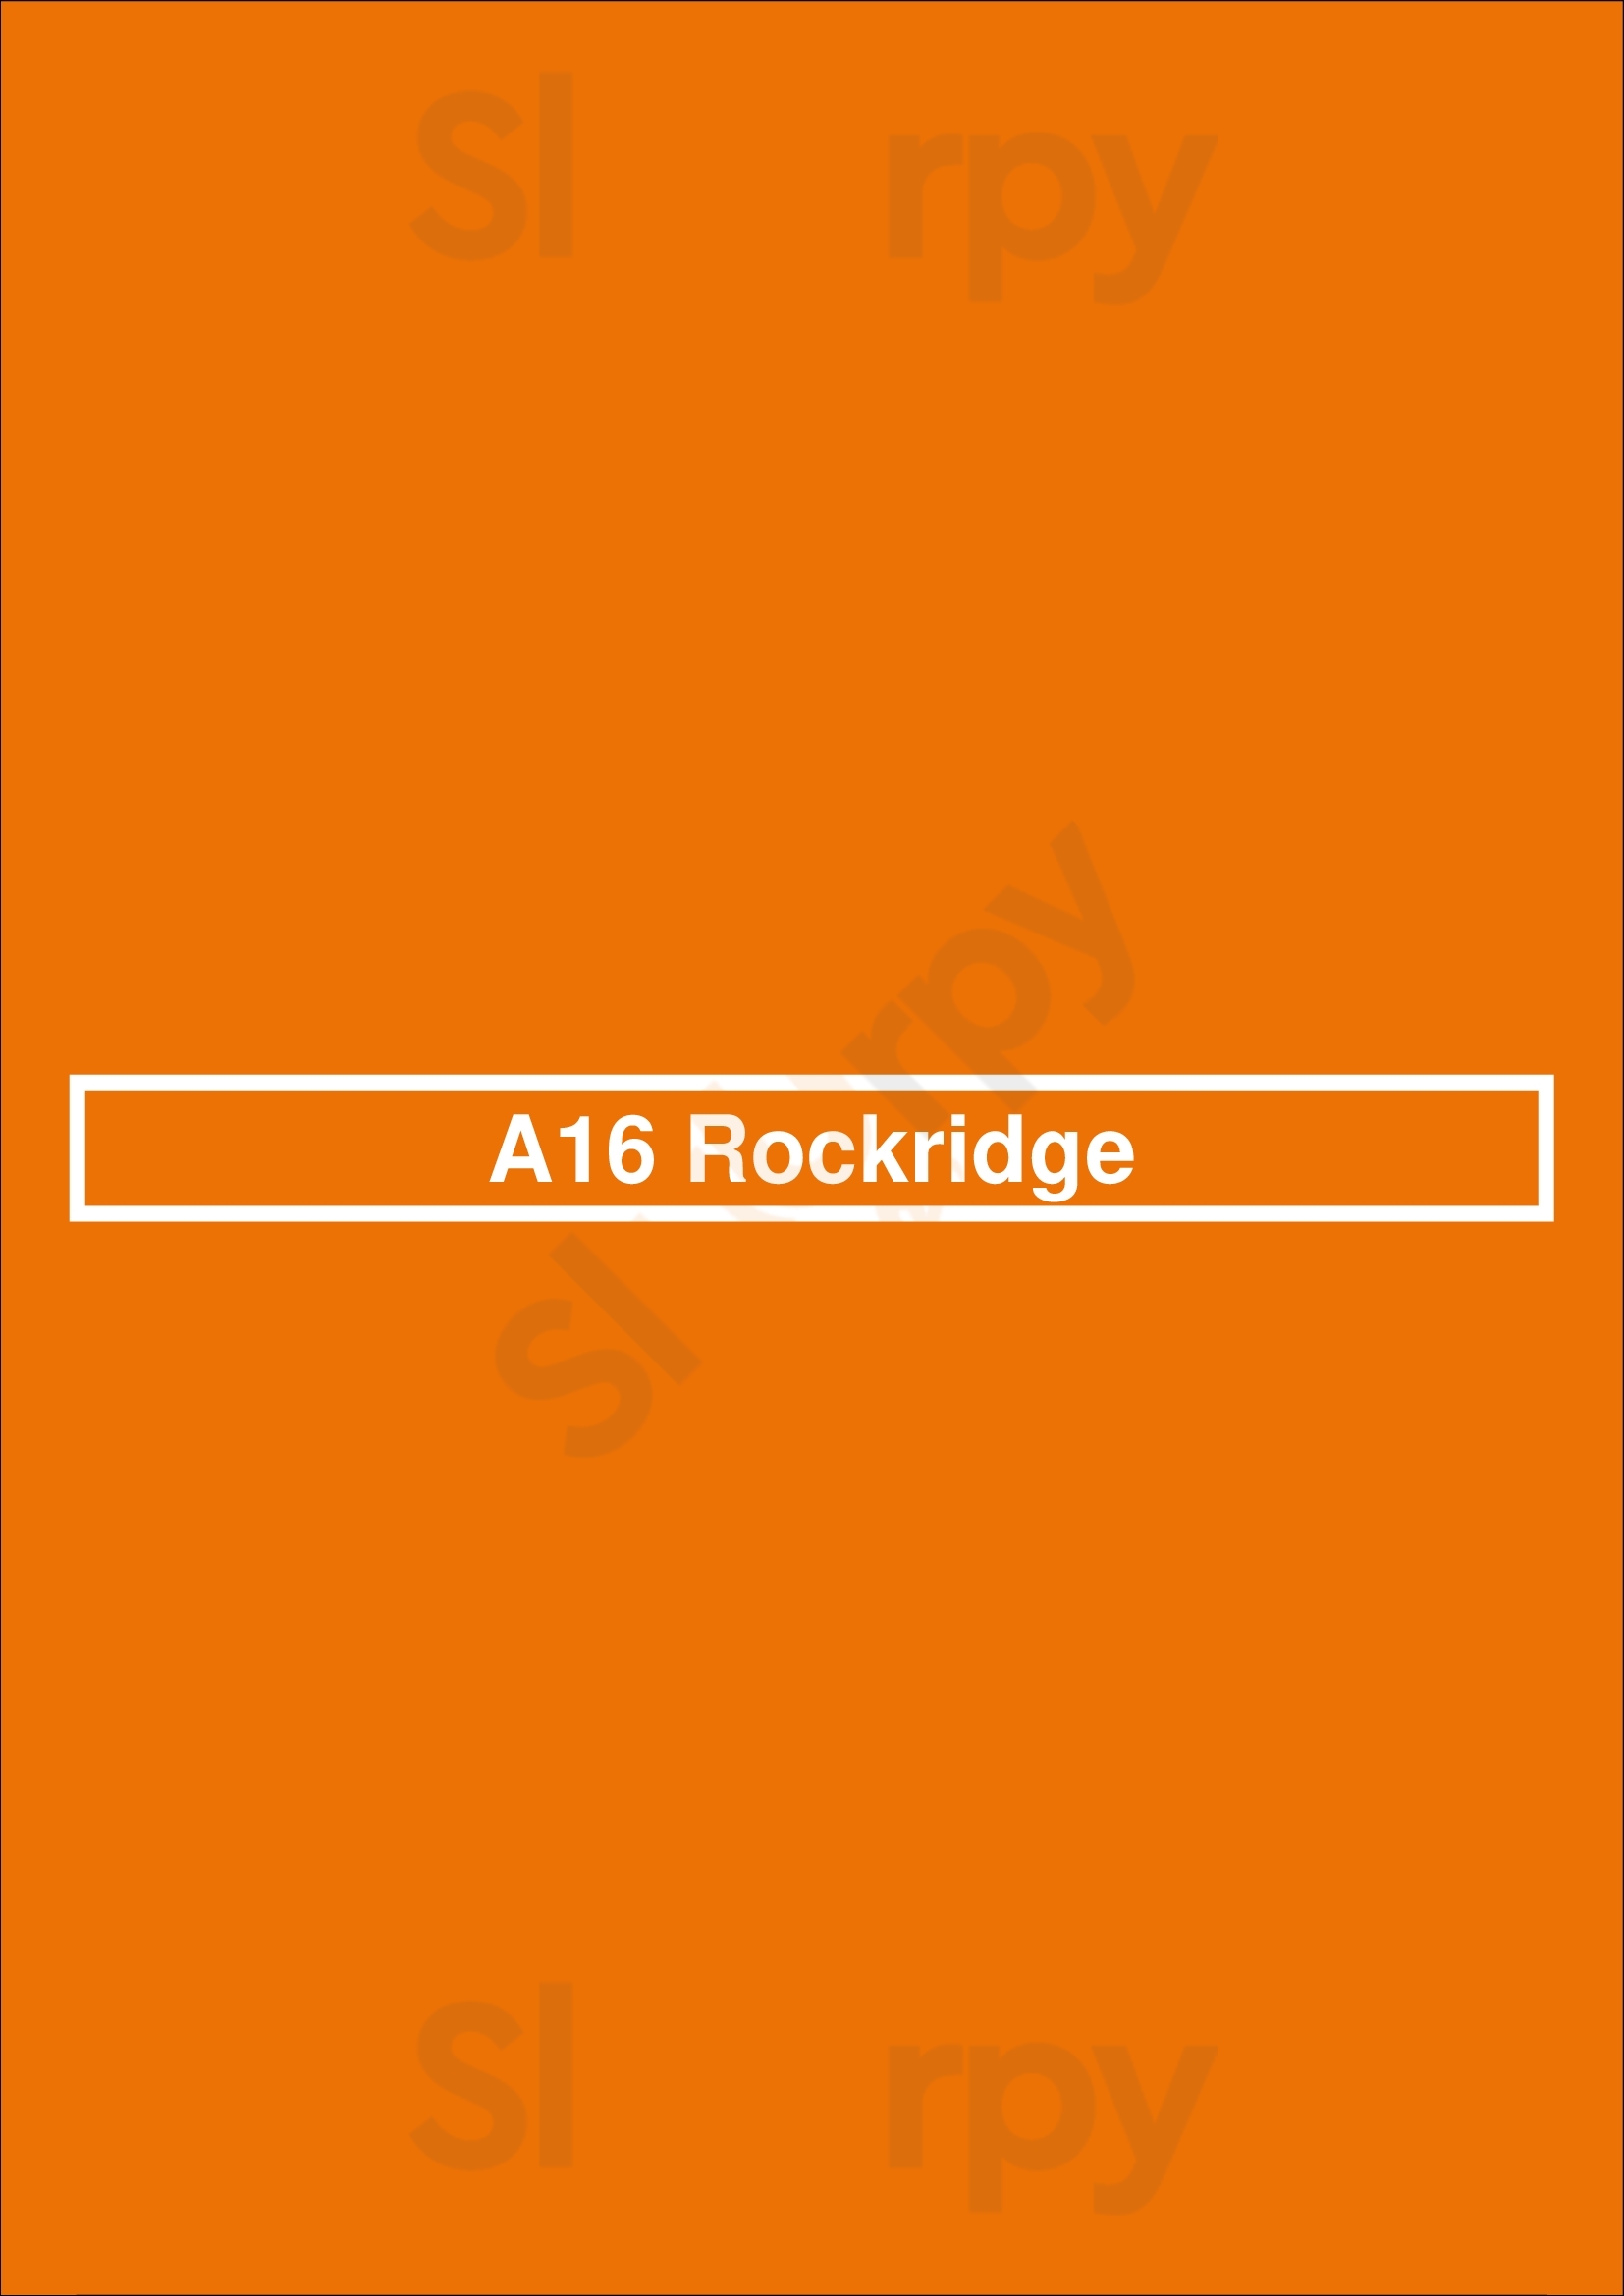 A16 Rockridge Oakland Menu - 1